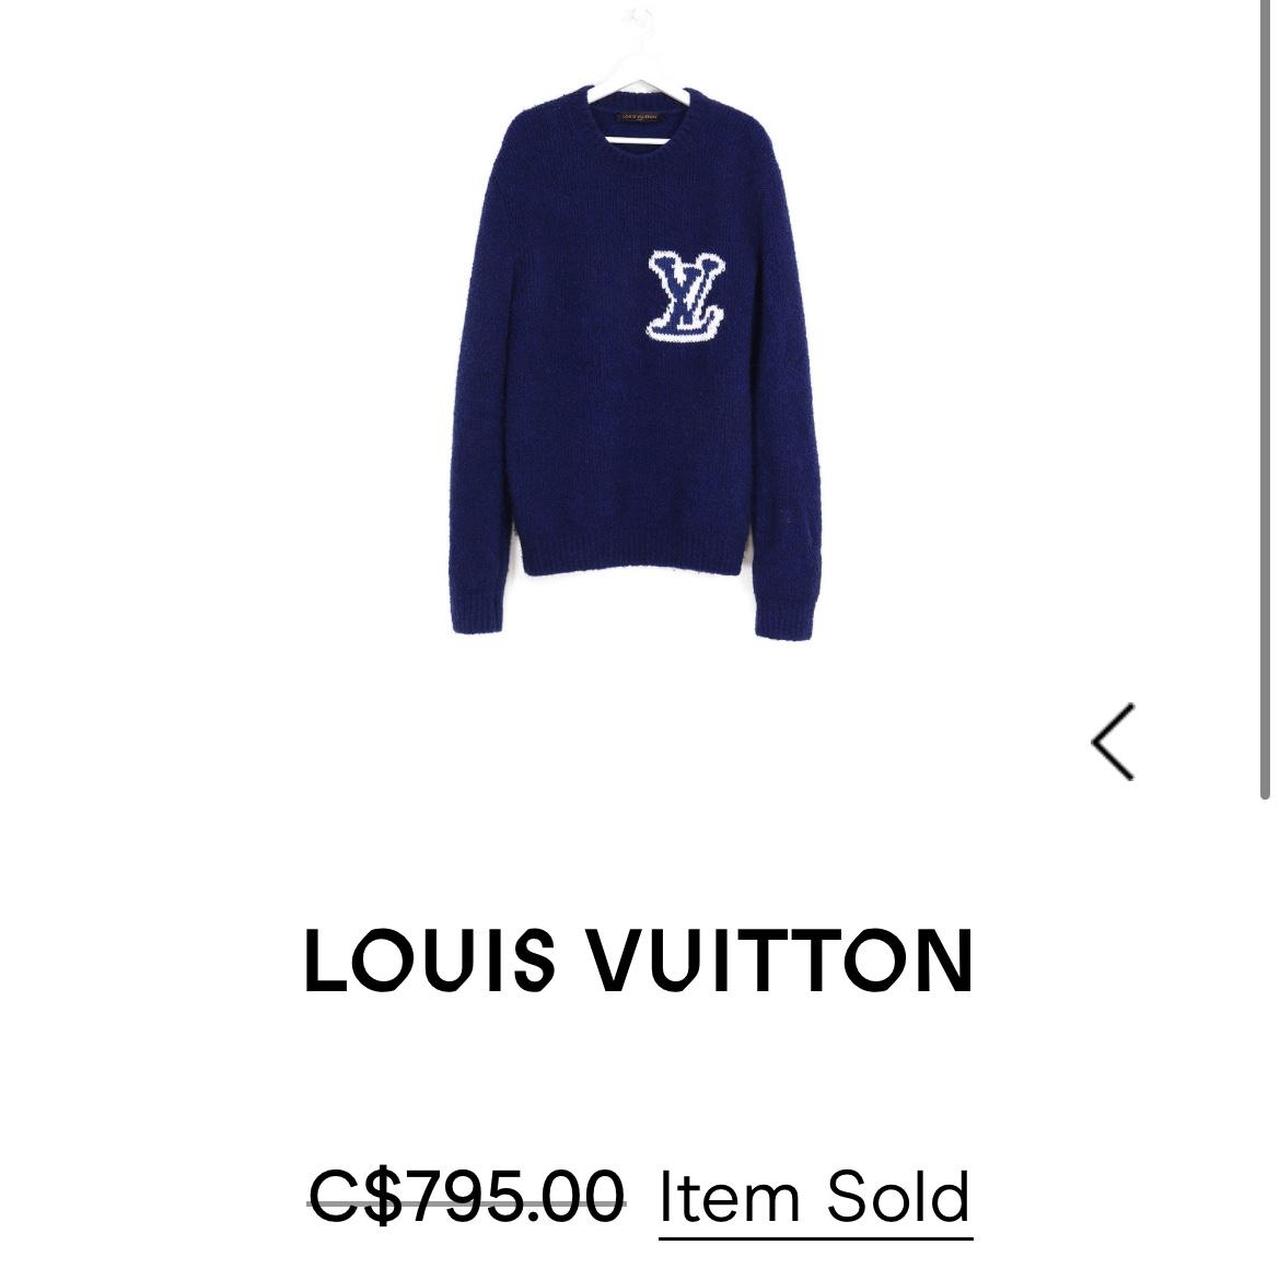 Supreme X Louis Vuitton crew neck - Depop